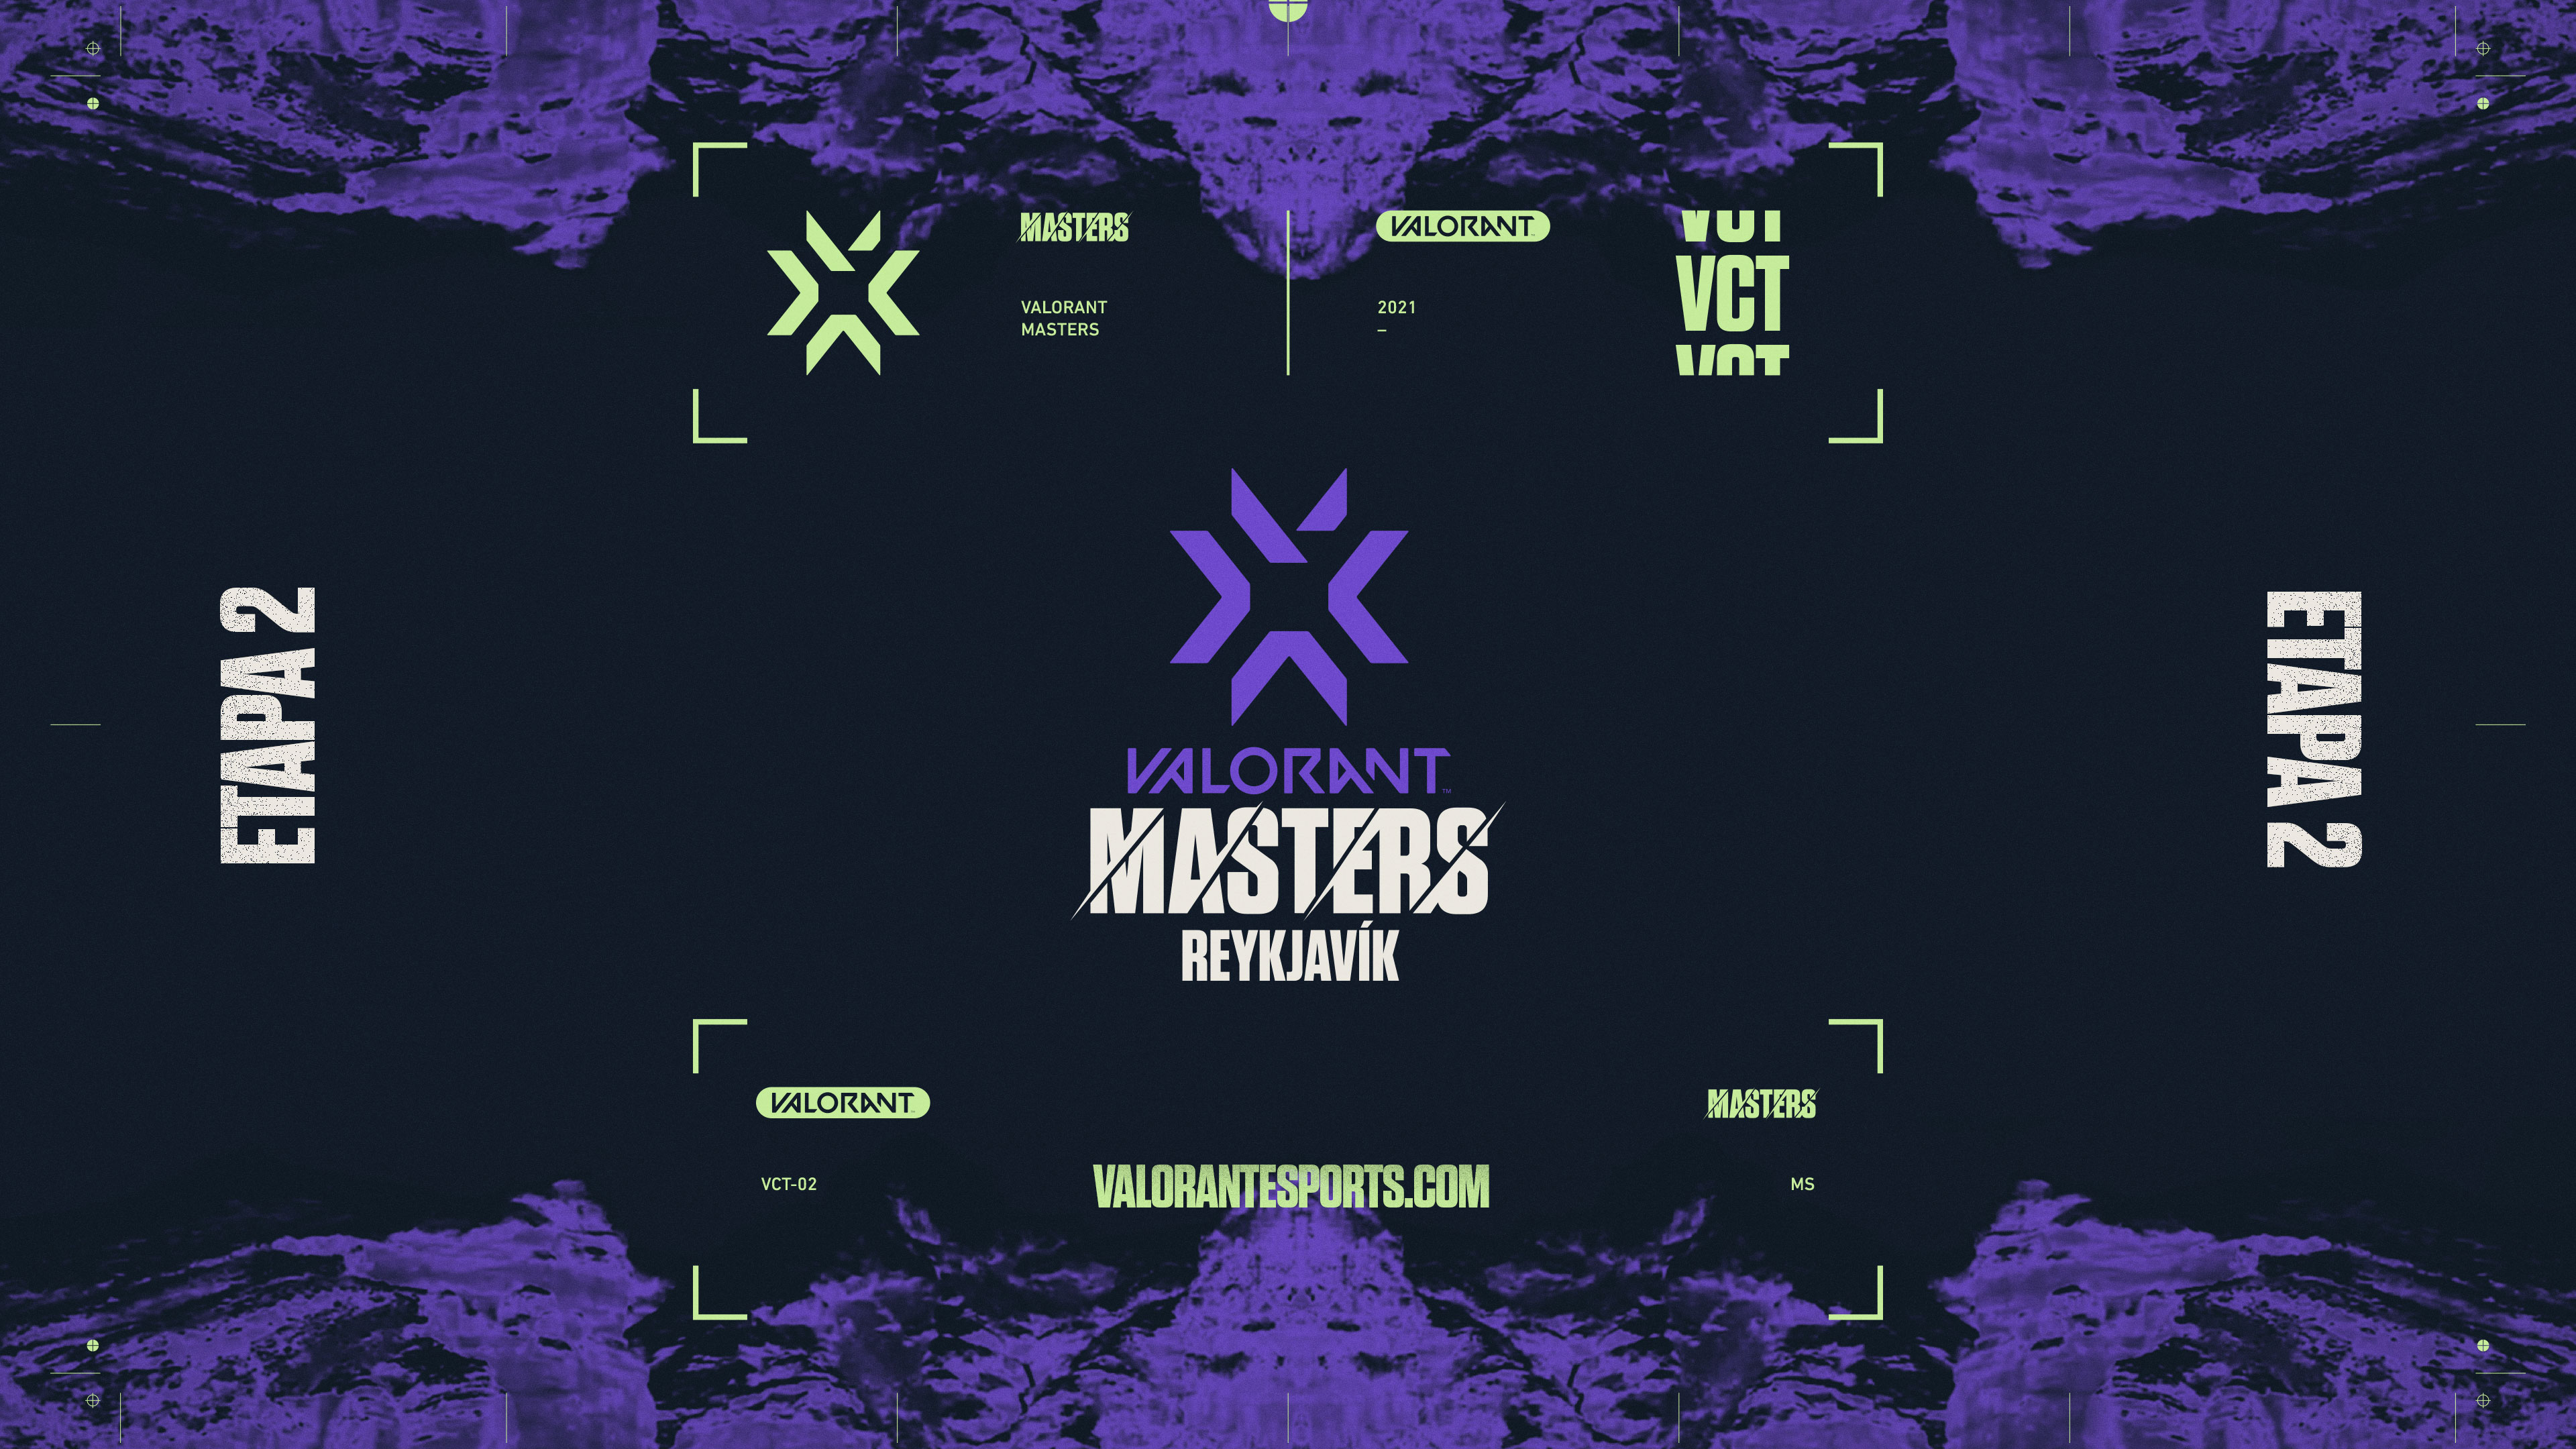 Vct 2024 masters madrid. Valorant Masters Reykjavik. VCT Masters Reykjavík. VCT Masters Reykjavík 2021. Valorant Masters Reykjavik 2022.